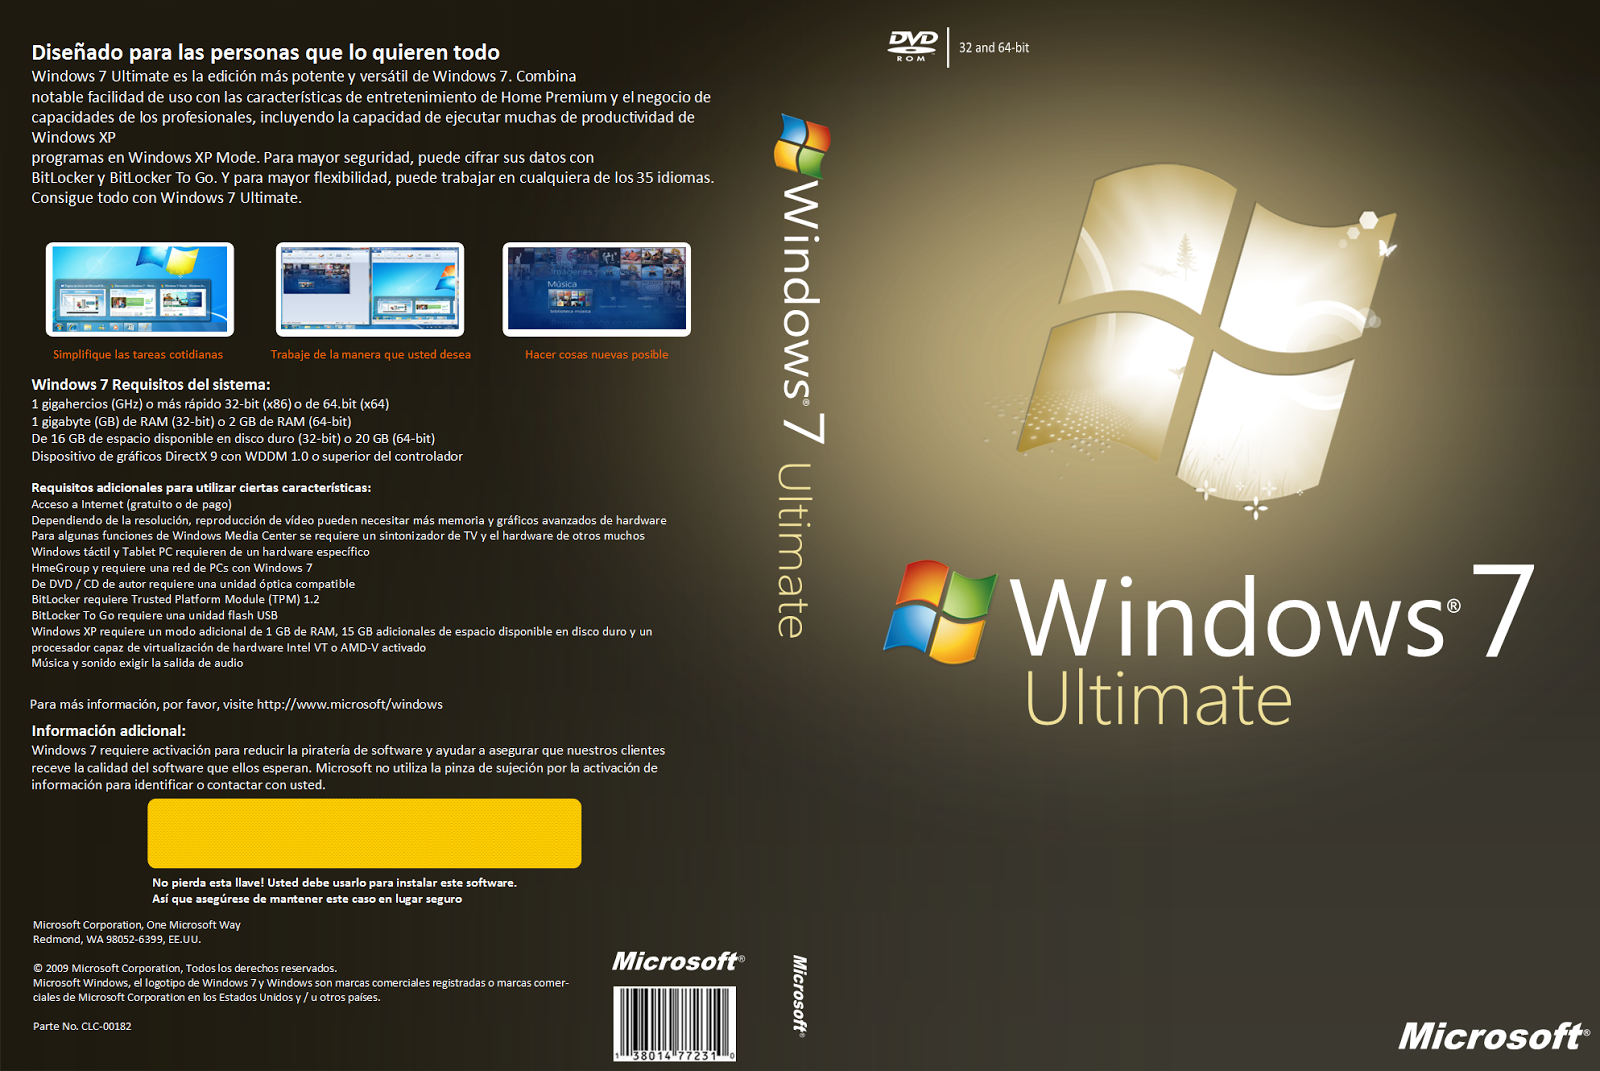 Windows 7 ultimate 32 bit product key 2009